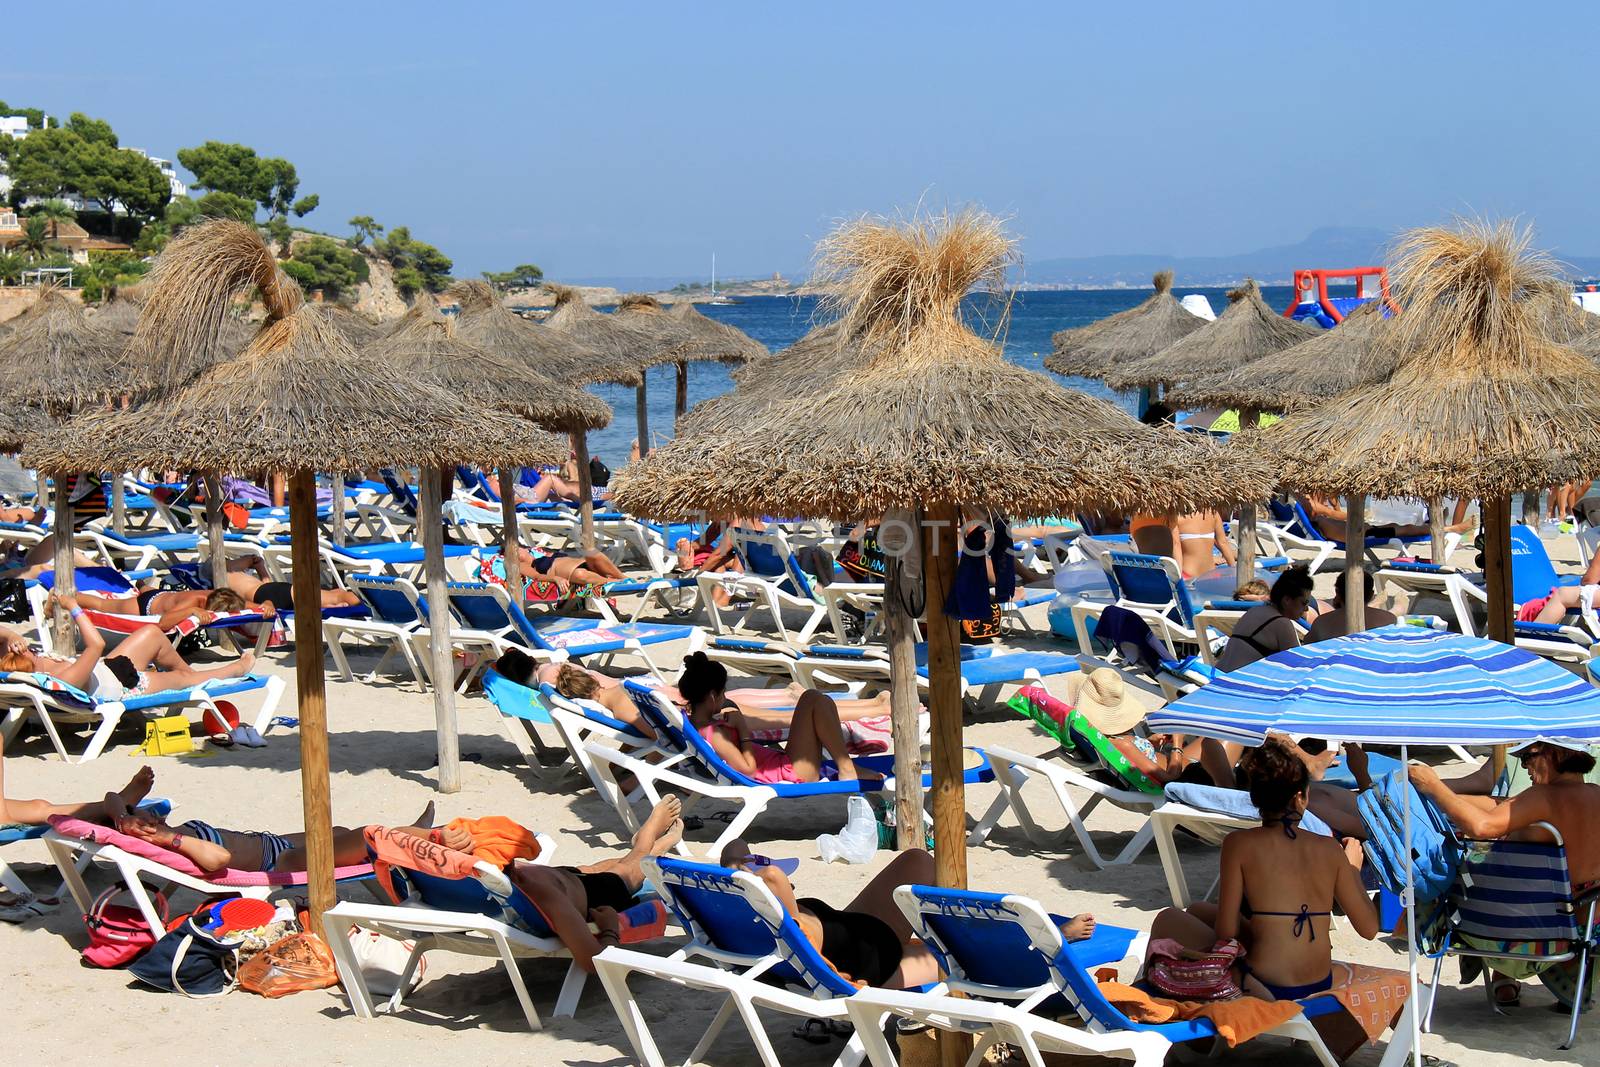 Sunbathers on a Spanish beach in summer by speedfighter